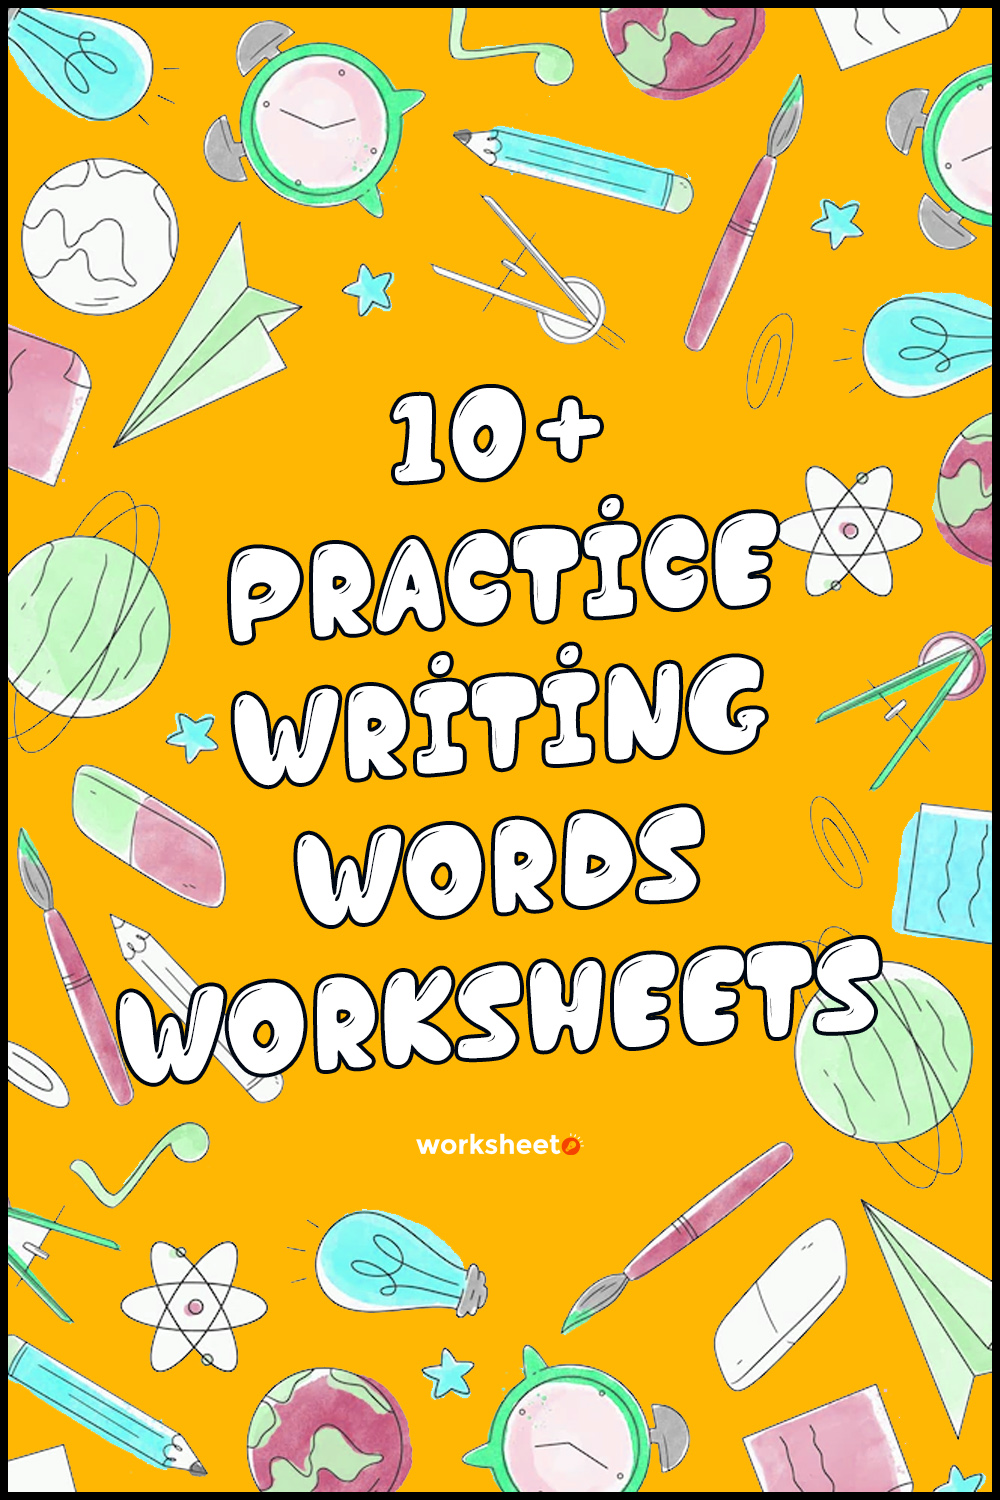 16 Practice Writing Words Worksheets - Free PDF at worksheeto.com